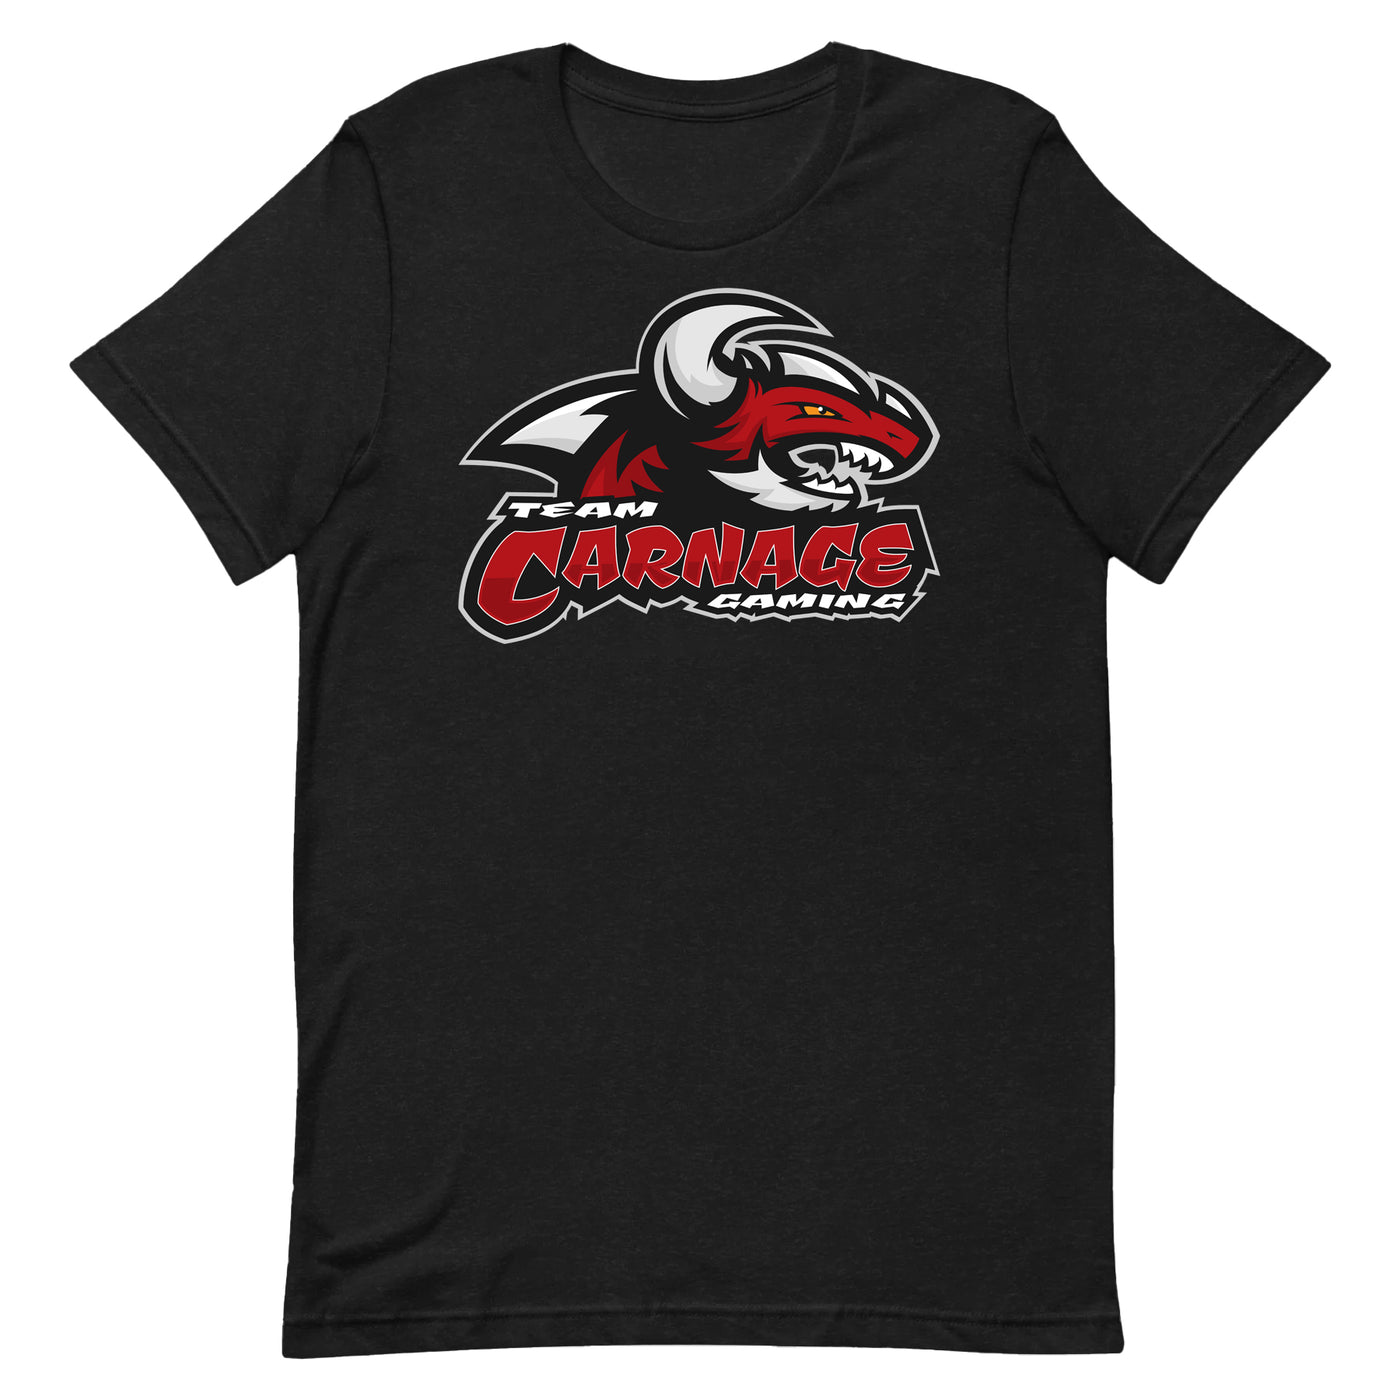 Team Carnage Unisex T-shirt